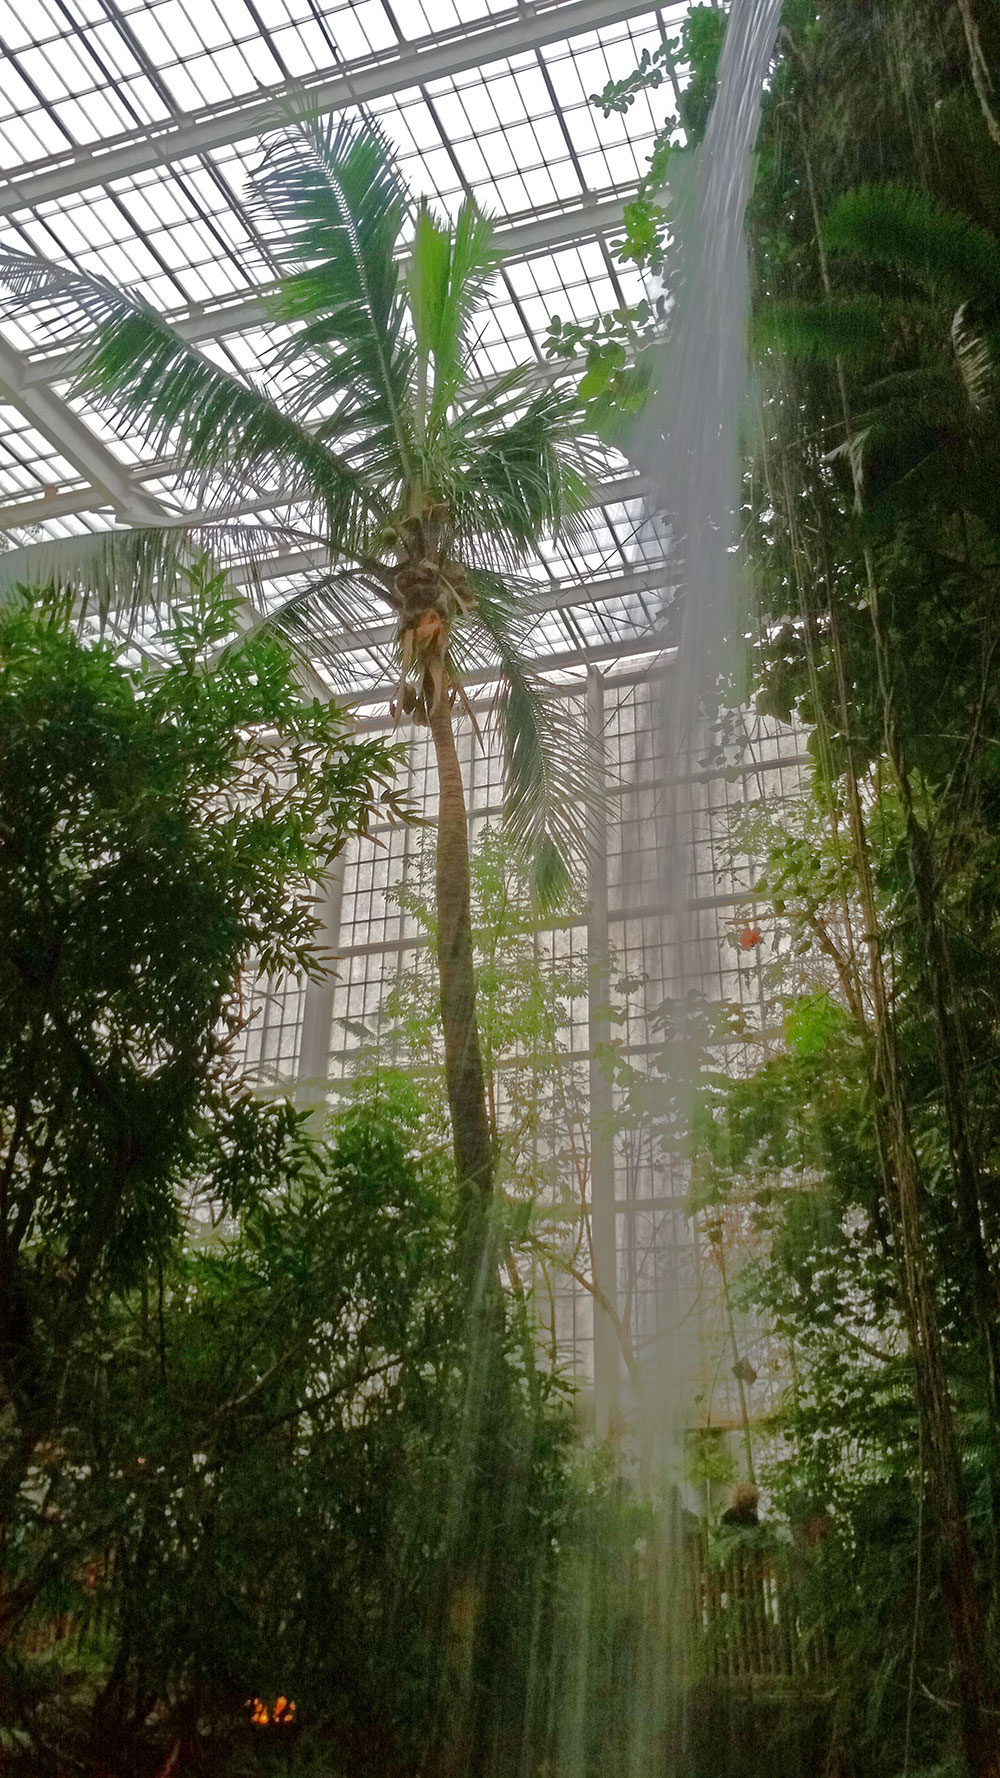 Jungle waterfall at the Dallas World Aquarium.